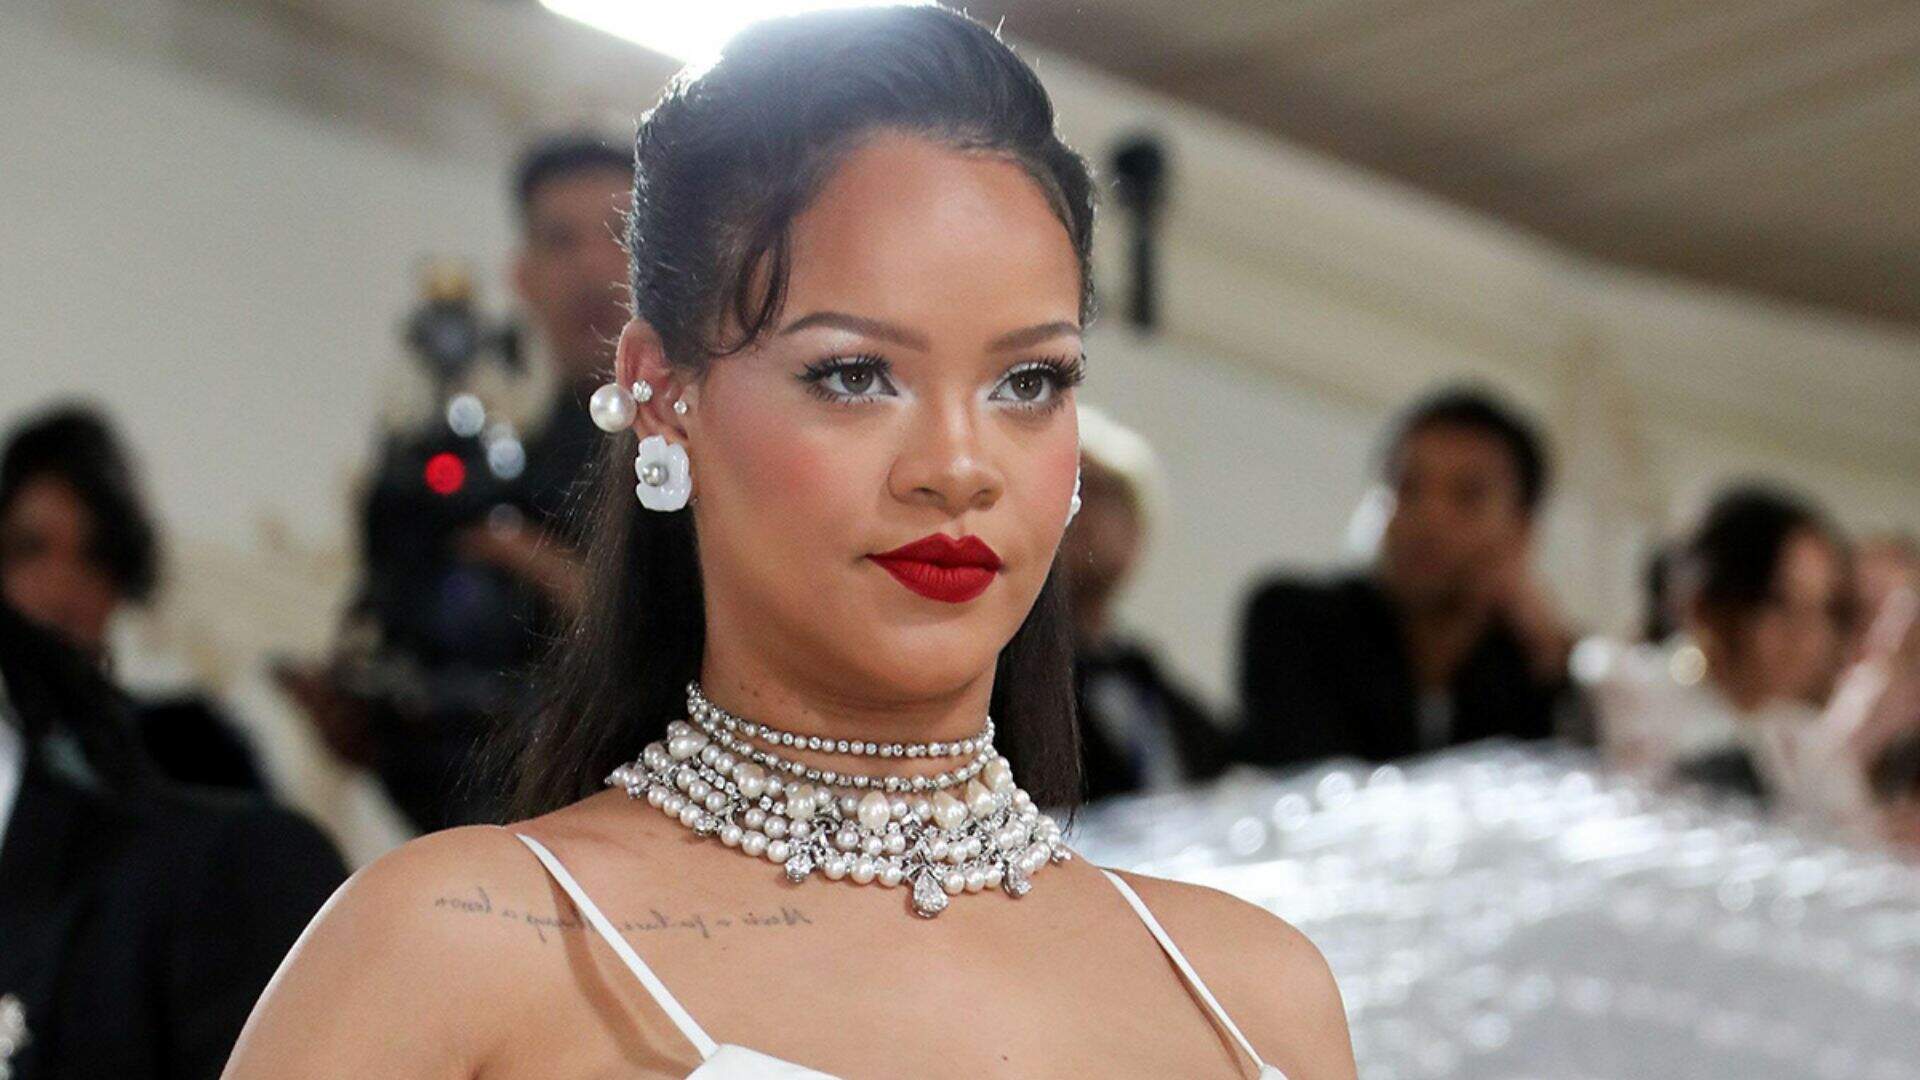 Durante o MET Gala, Rihanna fala sobre segunda gravidez: “Náusea” - Metropolitana FM